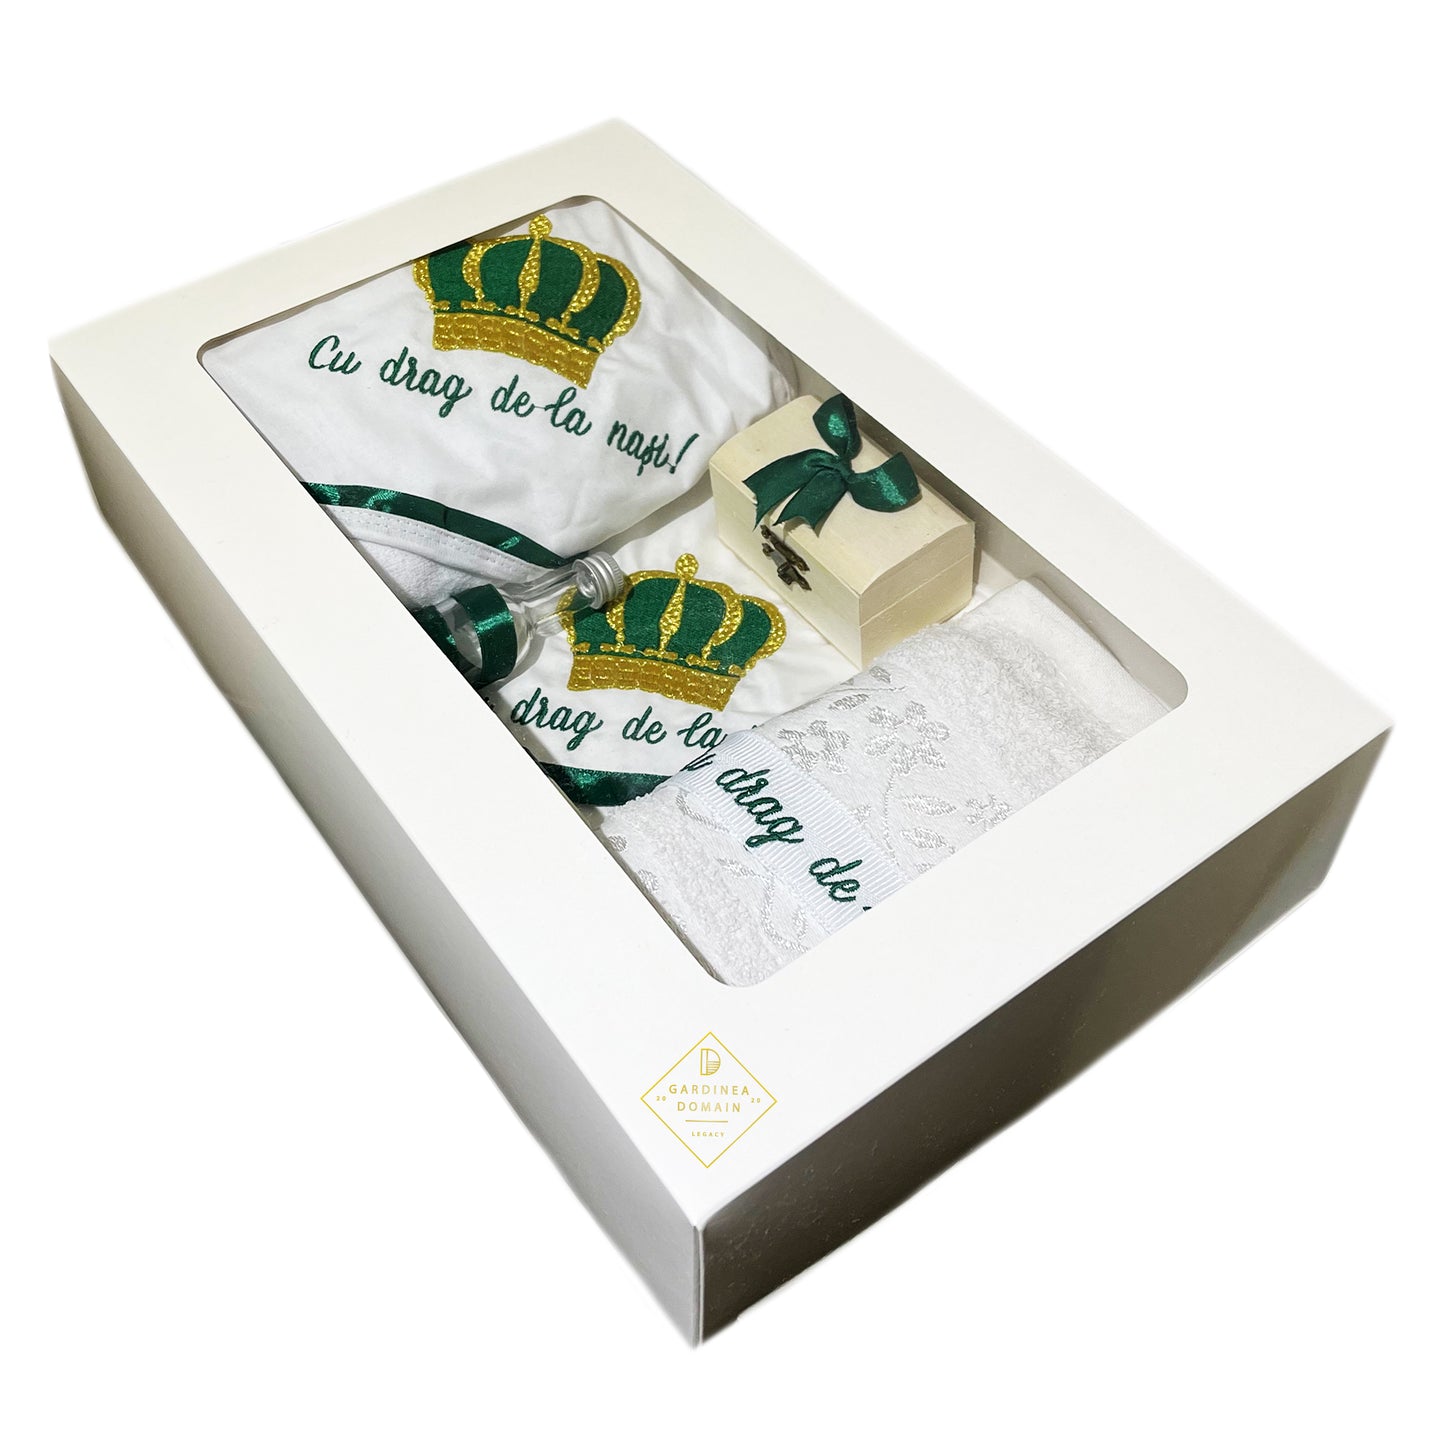 Trusou regal botez Gardinea Domain® 8 piese, in cutie cadou, bumbac 100%, personalizat brodat cu mesajul "Cu drag de la nasi!", verde